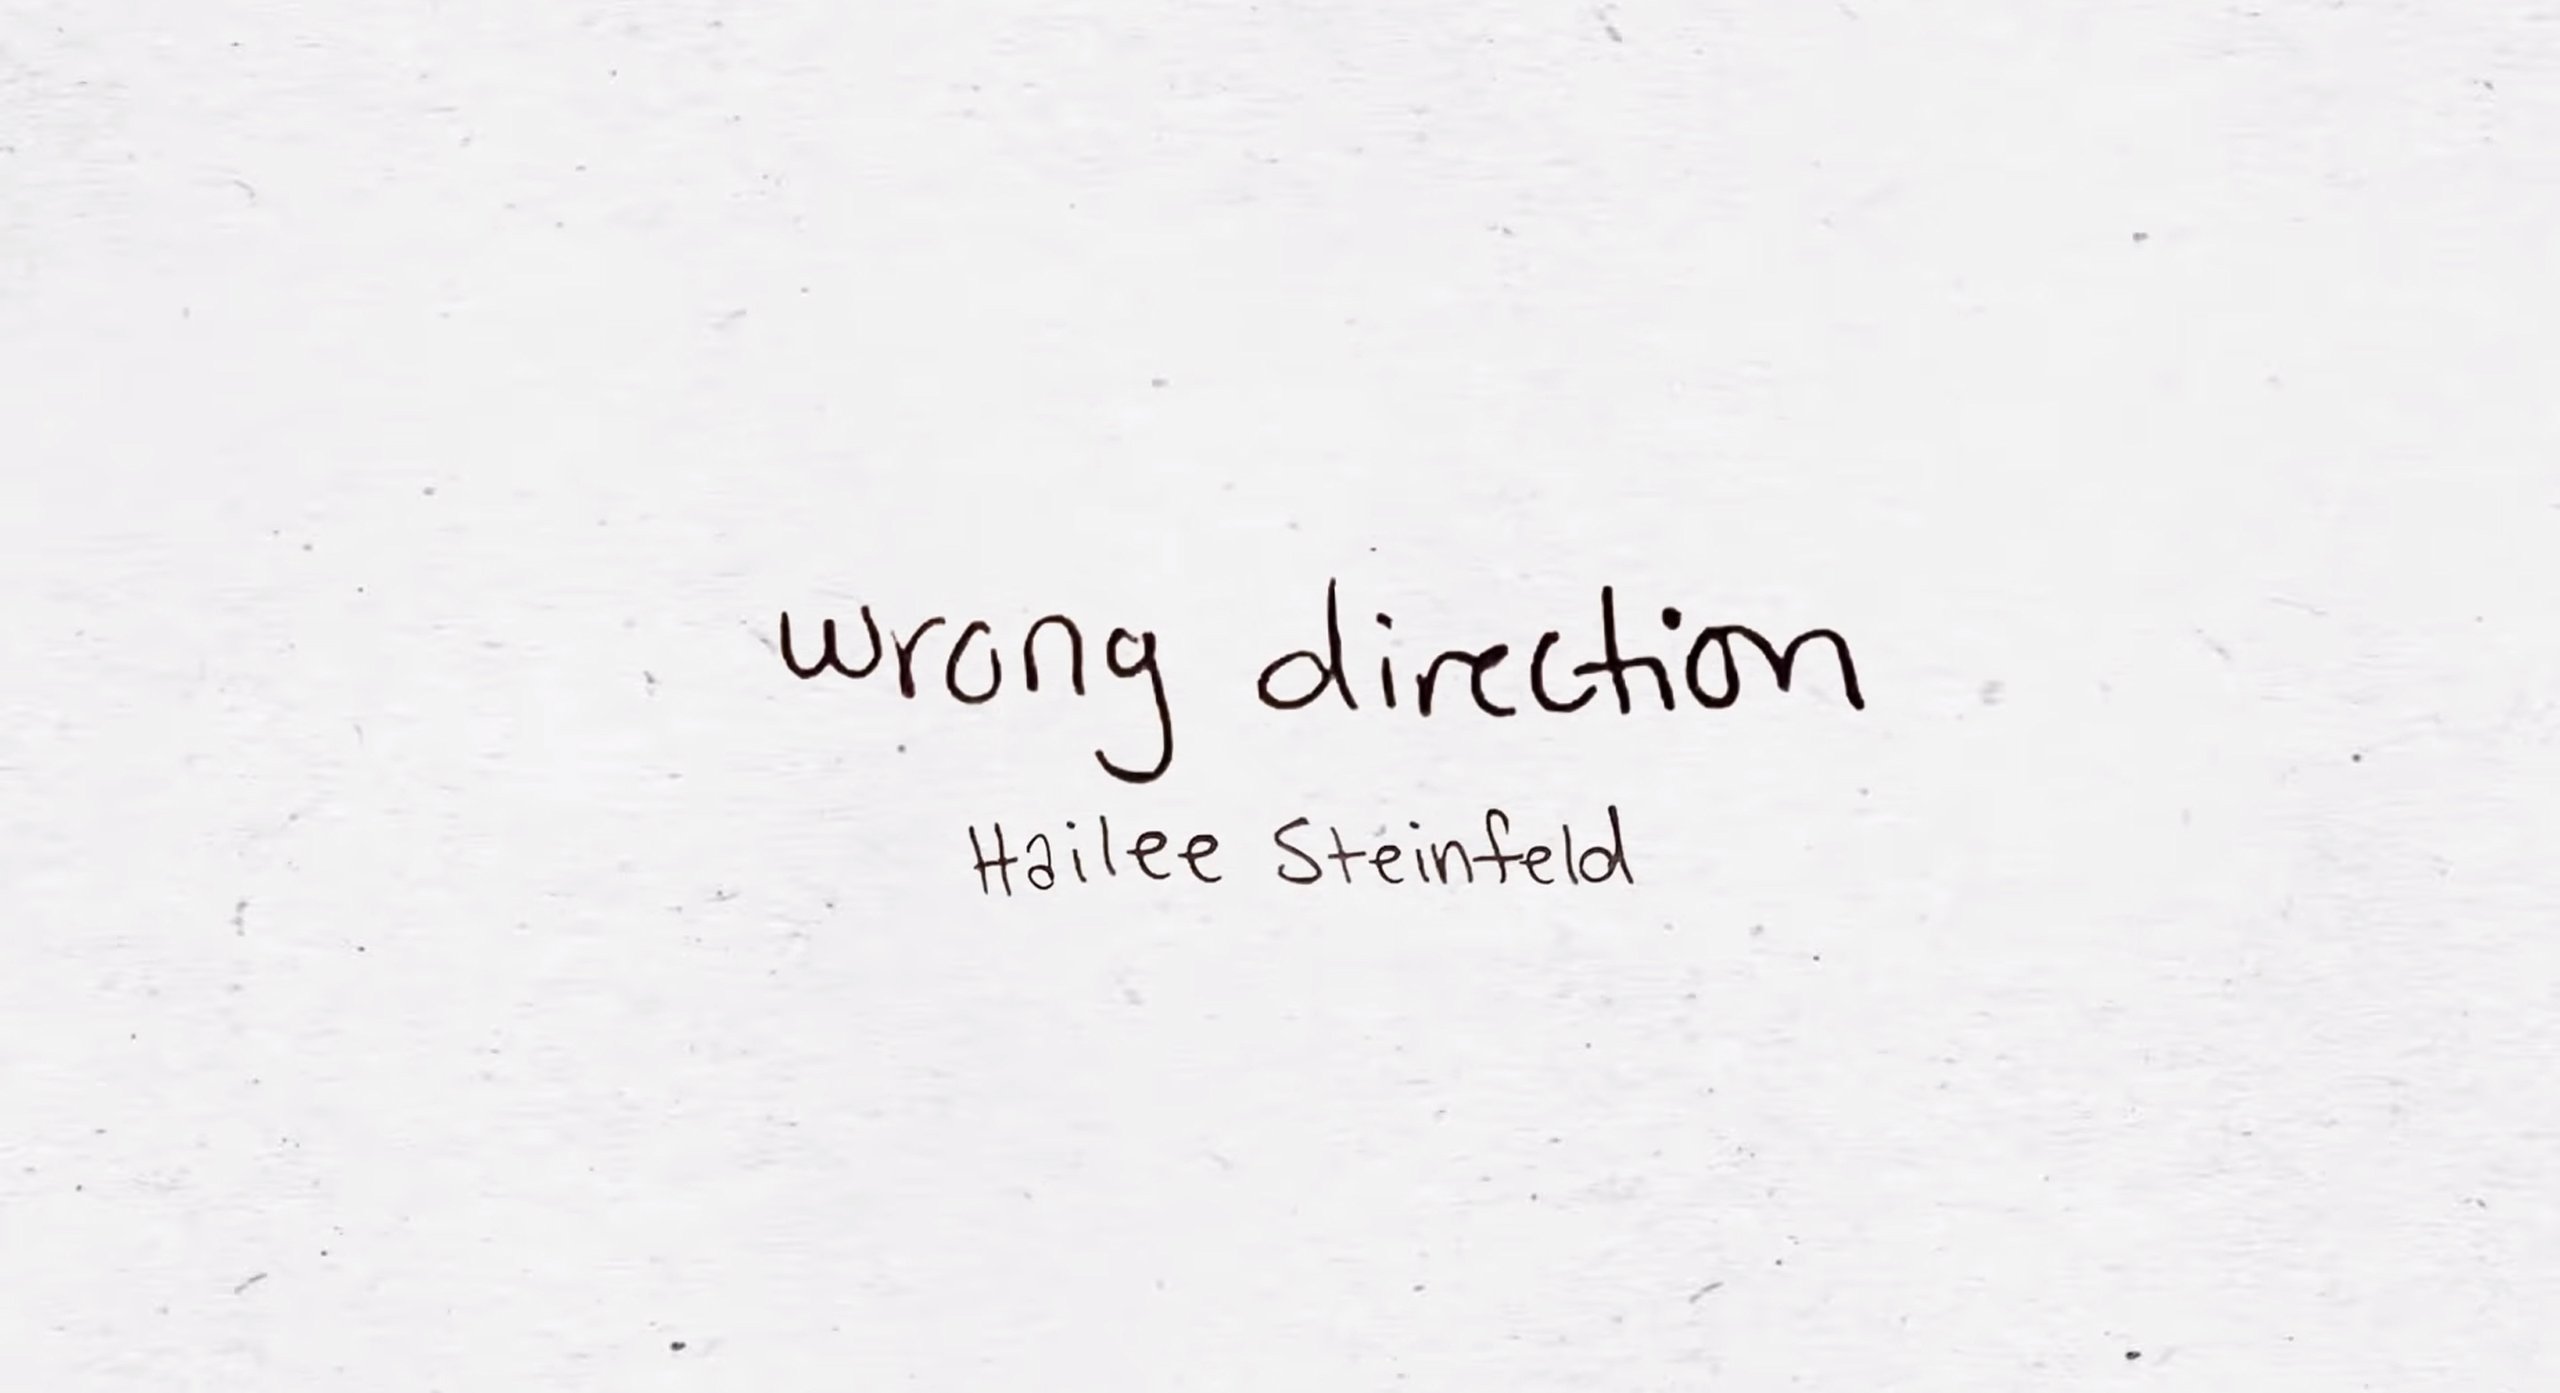 Hailee Steinfeld lança "Wrong Direction" com direito a lyric video